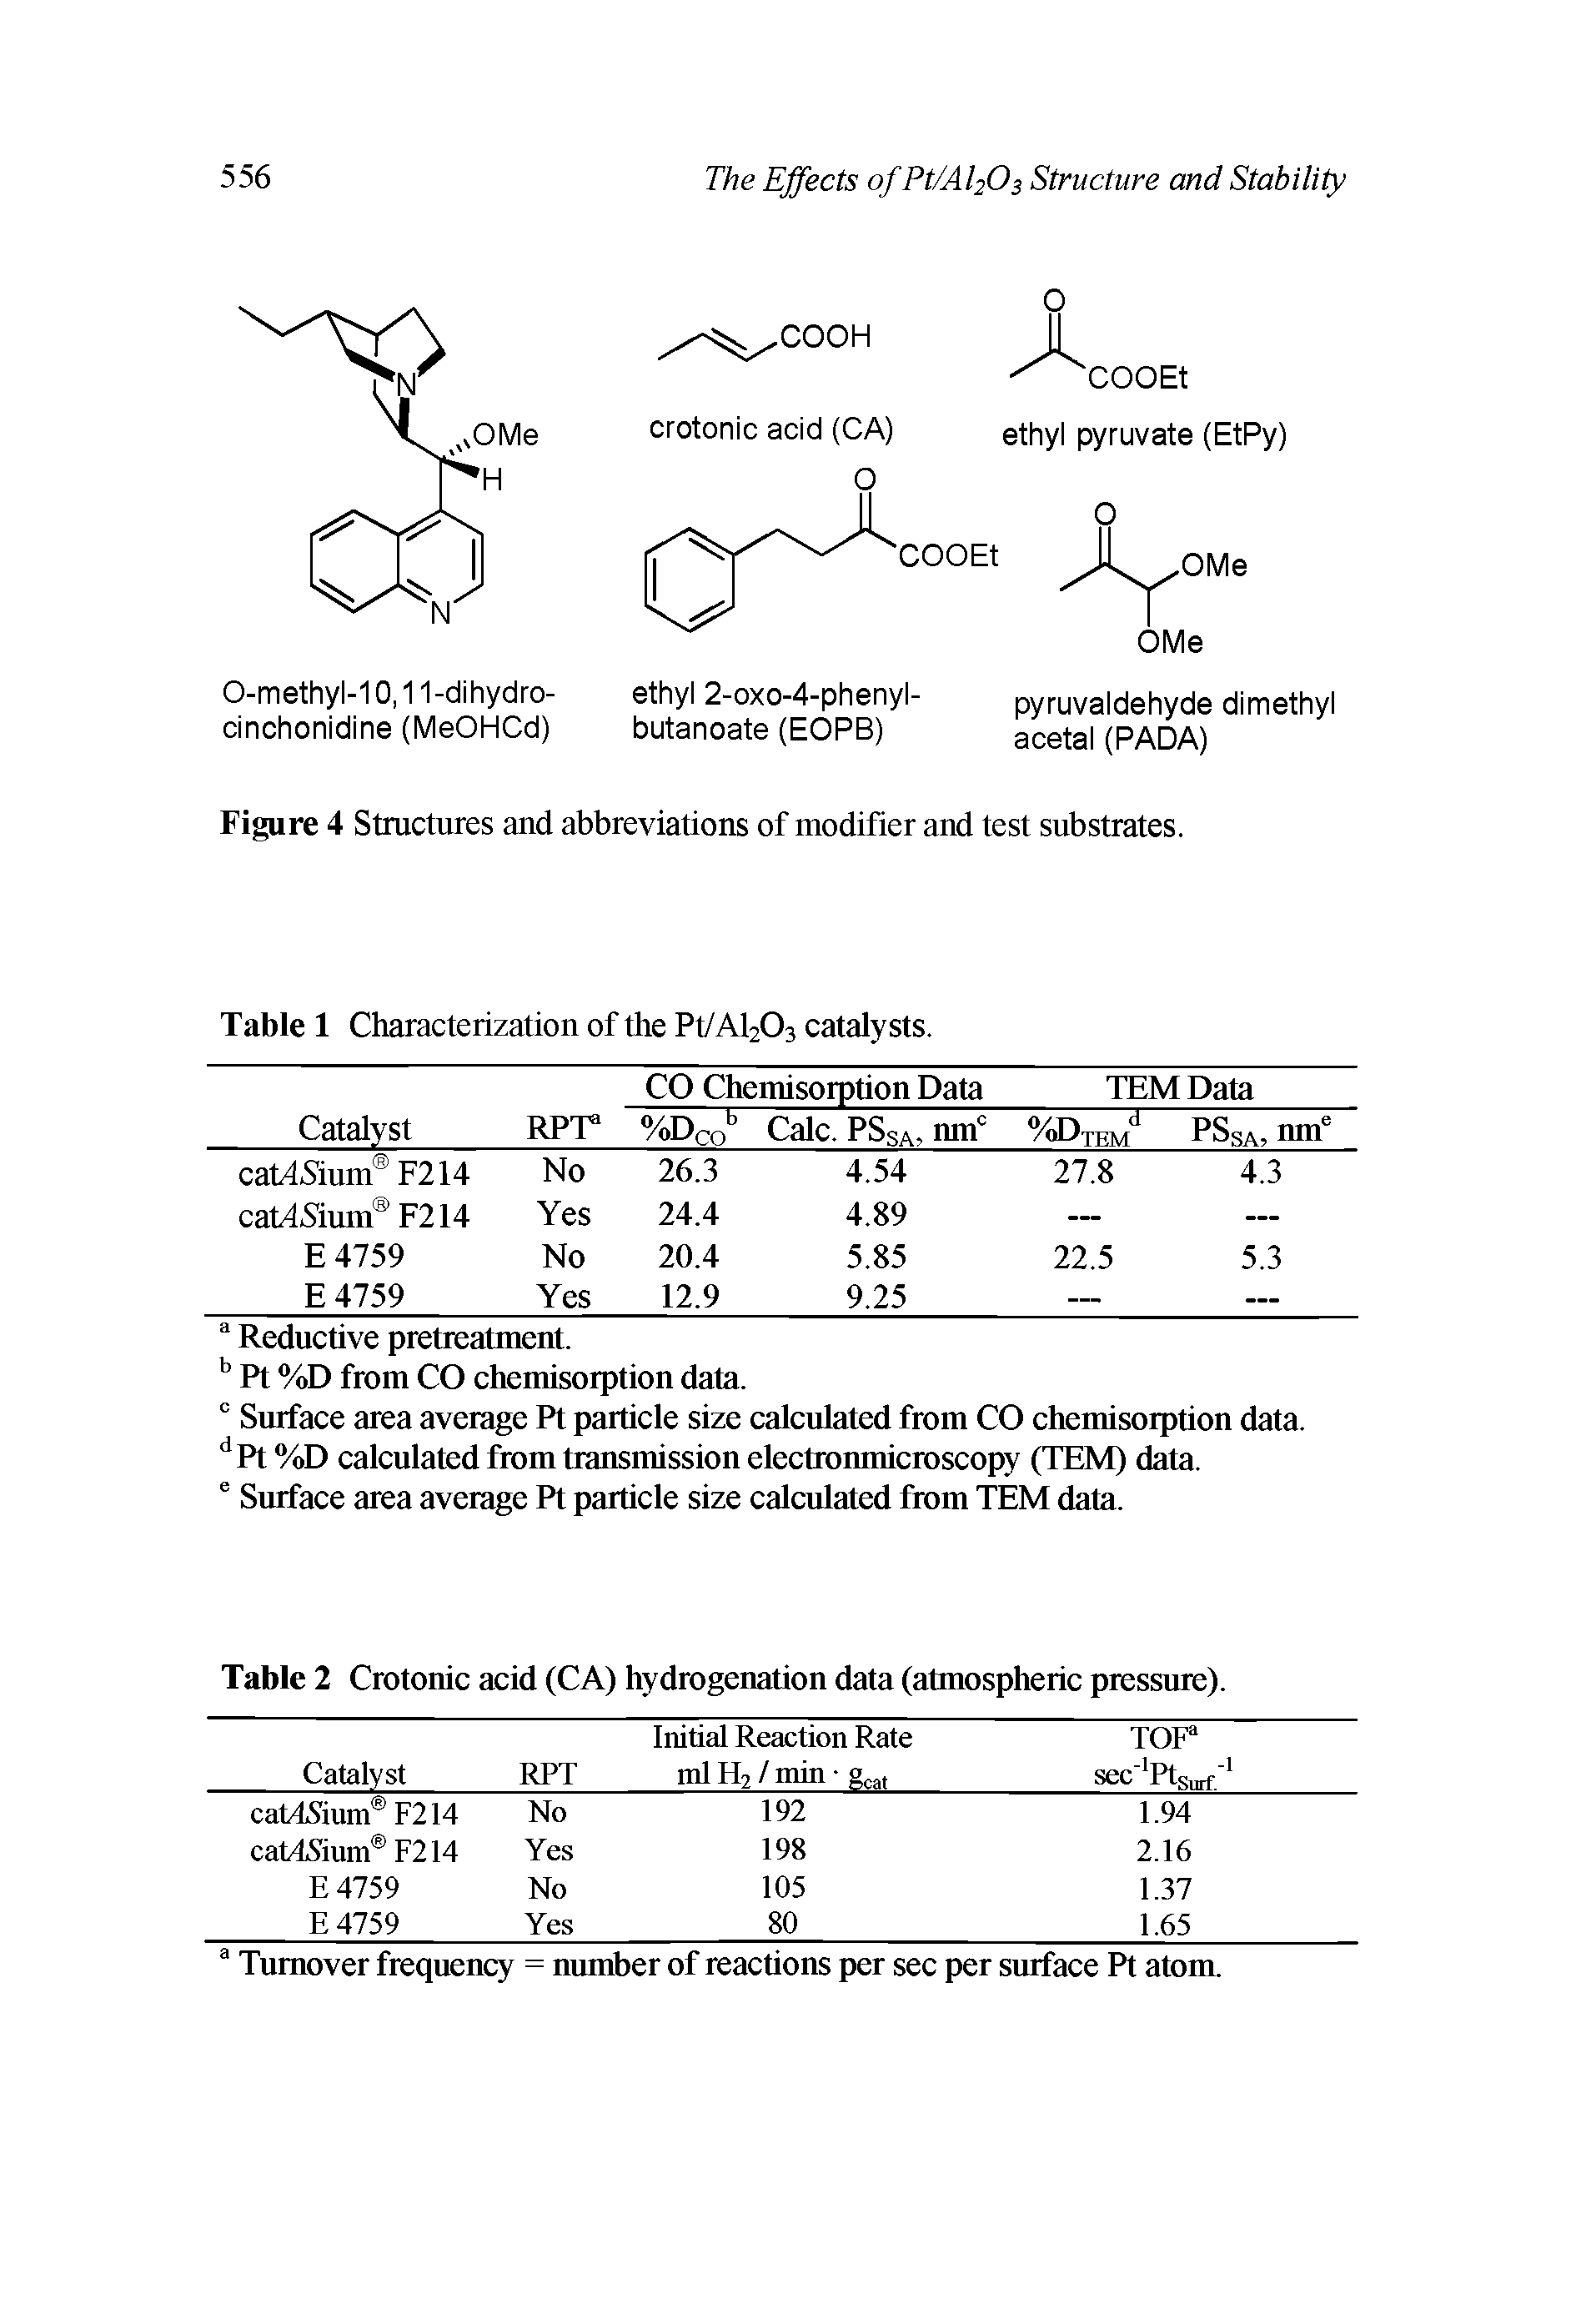 Table 2 Crotonic acid (CA) hydrogenation data (atmospheric pressure).